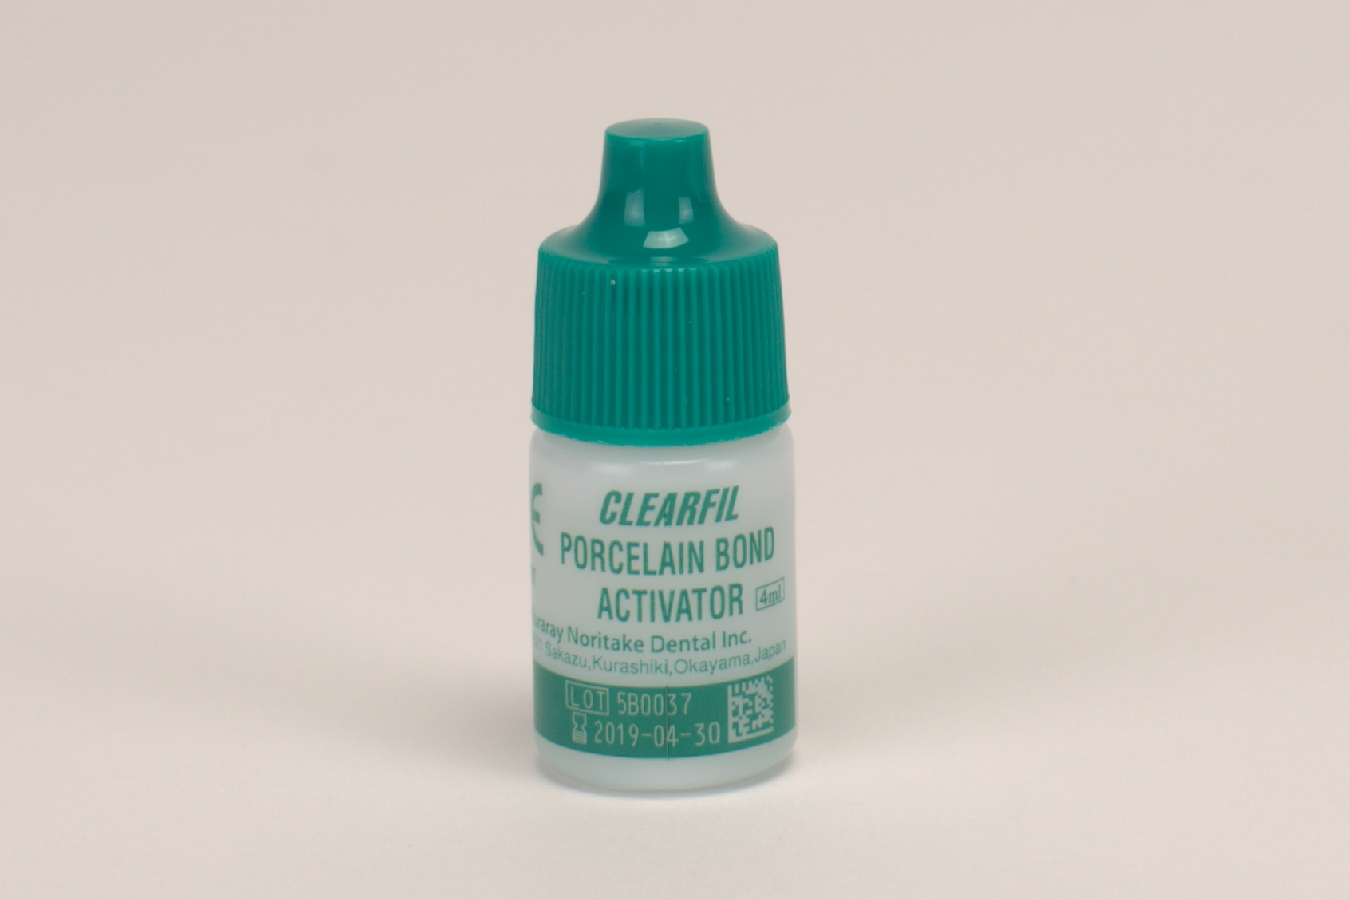 Clearfil Porcelain Bond Activator 4ml